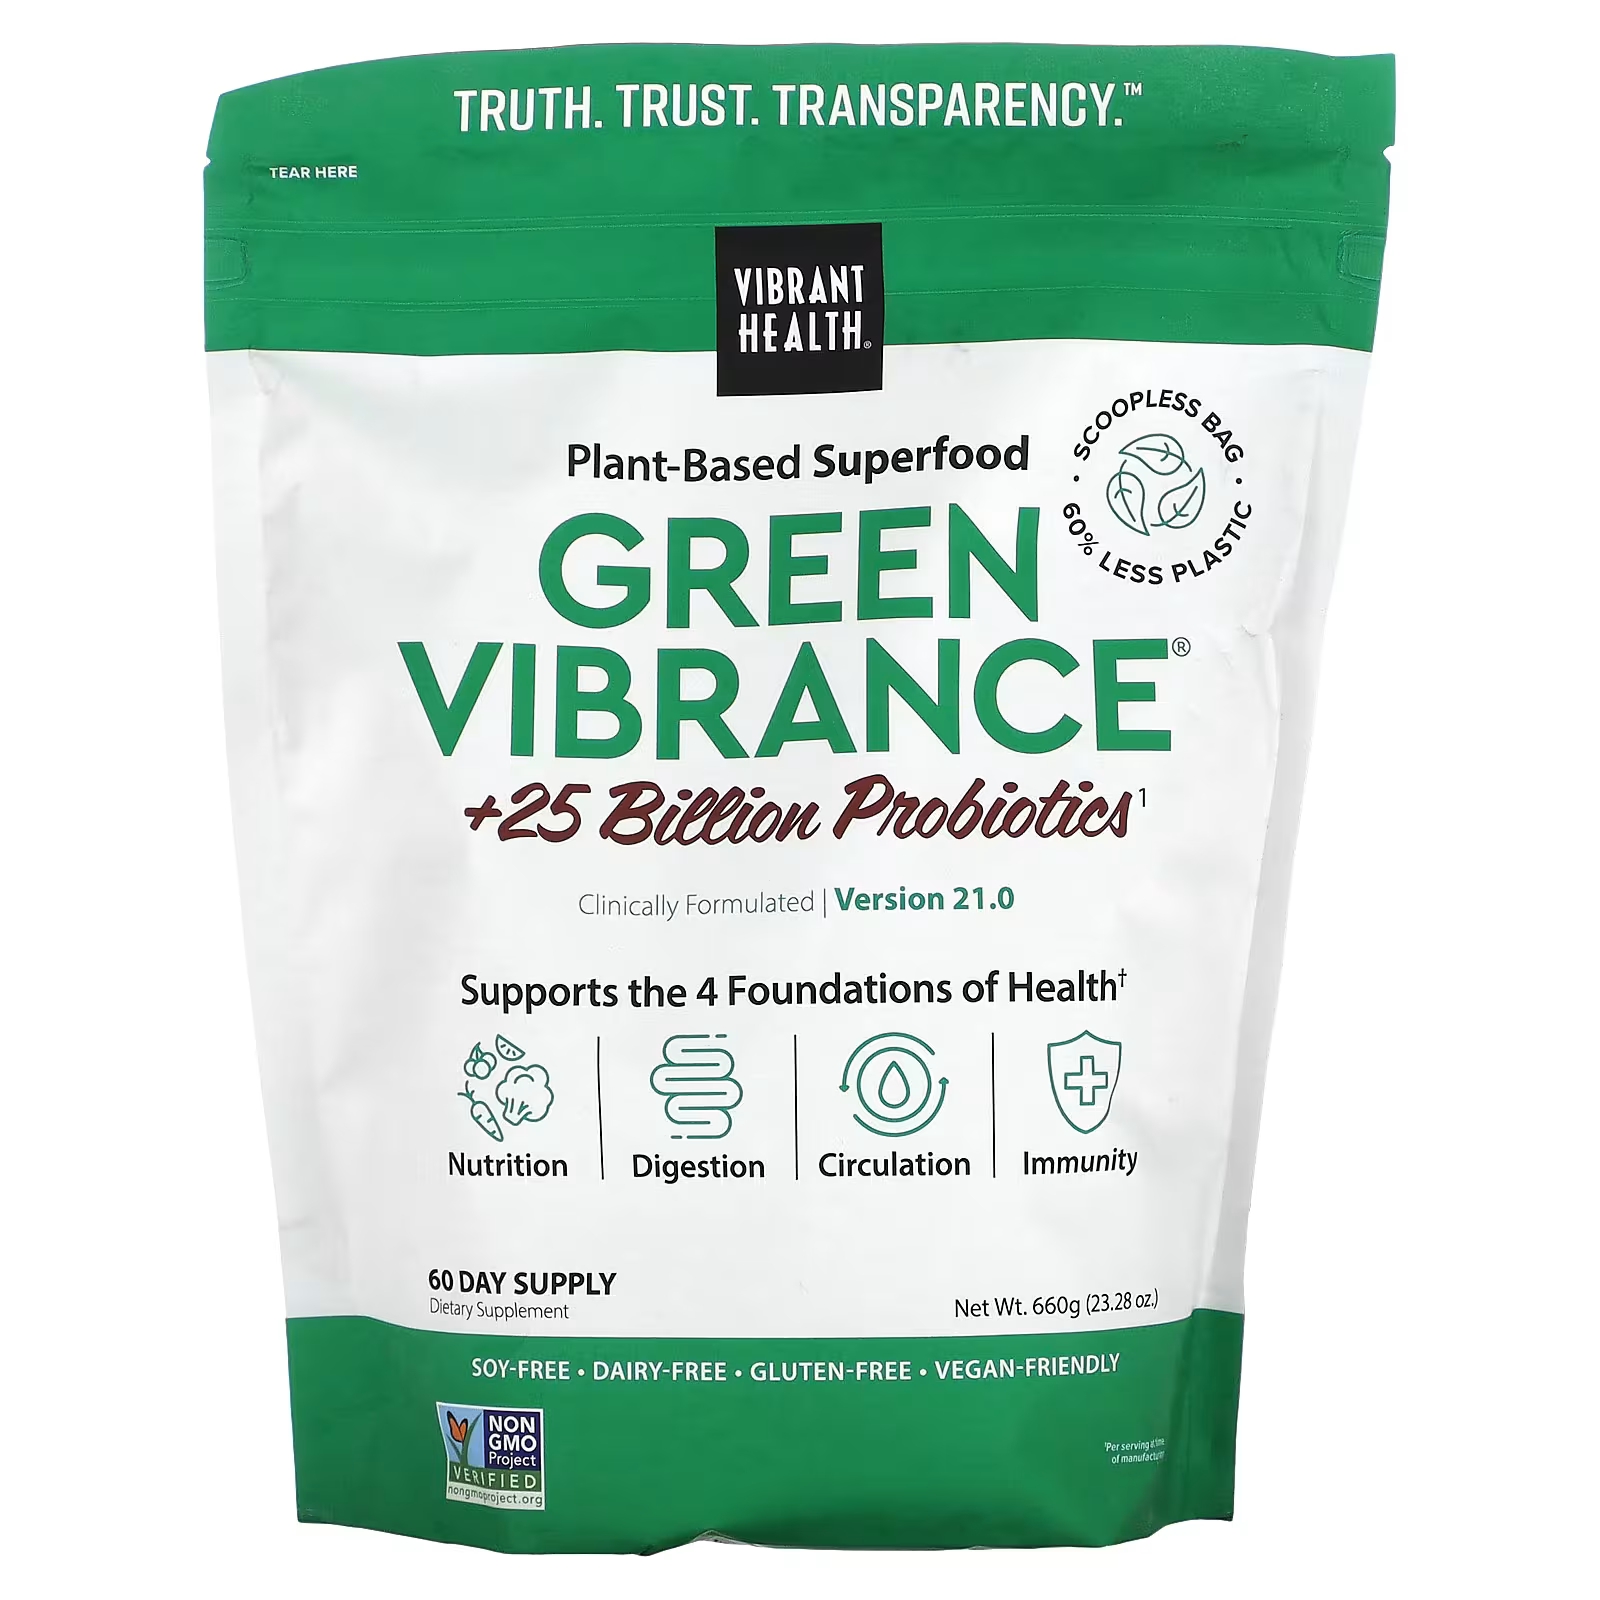 Пищевая добавка Vibrant Health Green Vibrance, 23,28 унции vibrant health green vibrance 25 млрд пробиотиков версия 19 1 675 6 г 23 83 унции